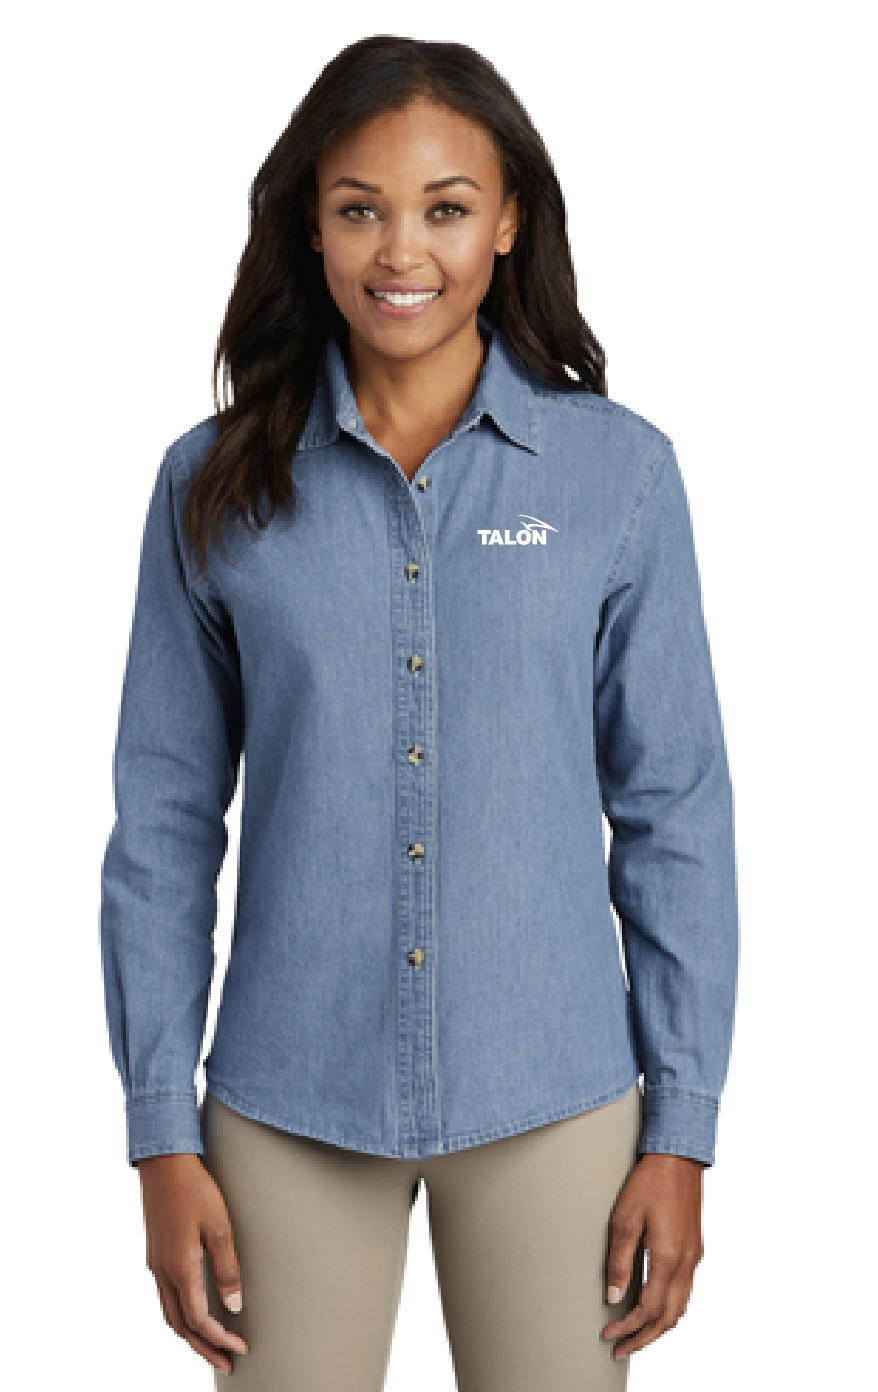 Talon - LSP10
Port & Company Ladies Long Sleeve Value Denim Shirt